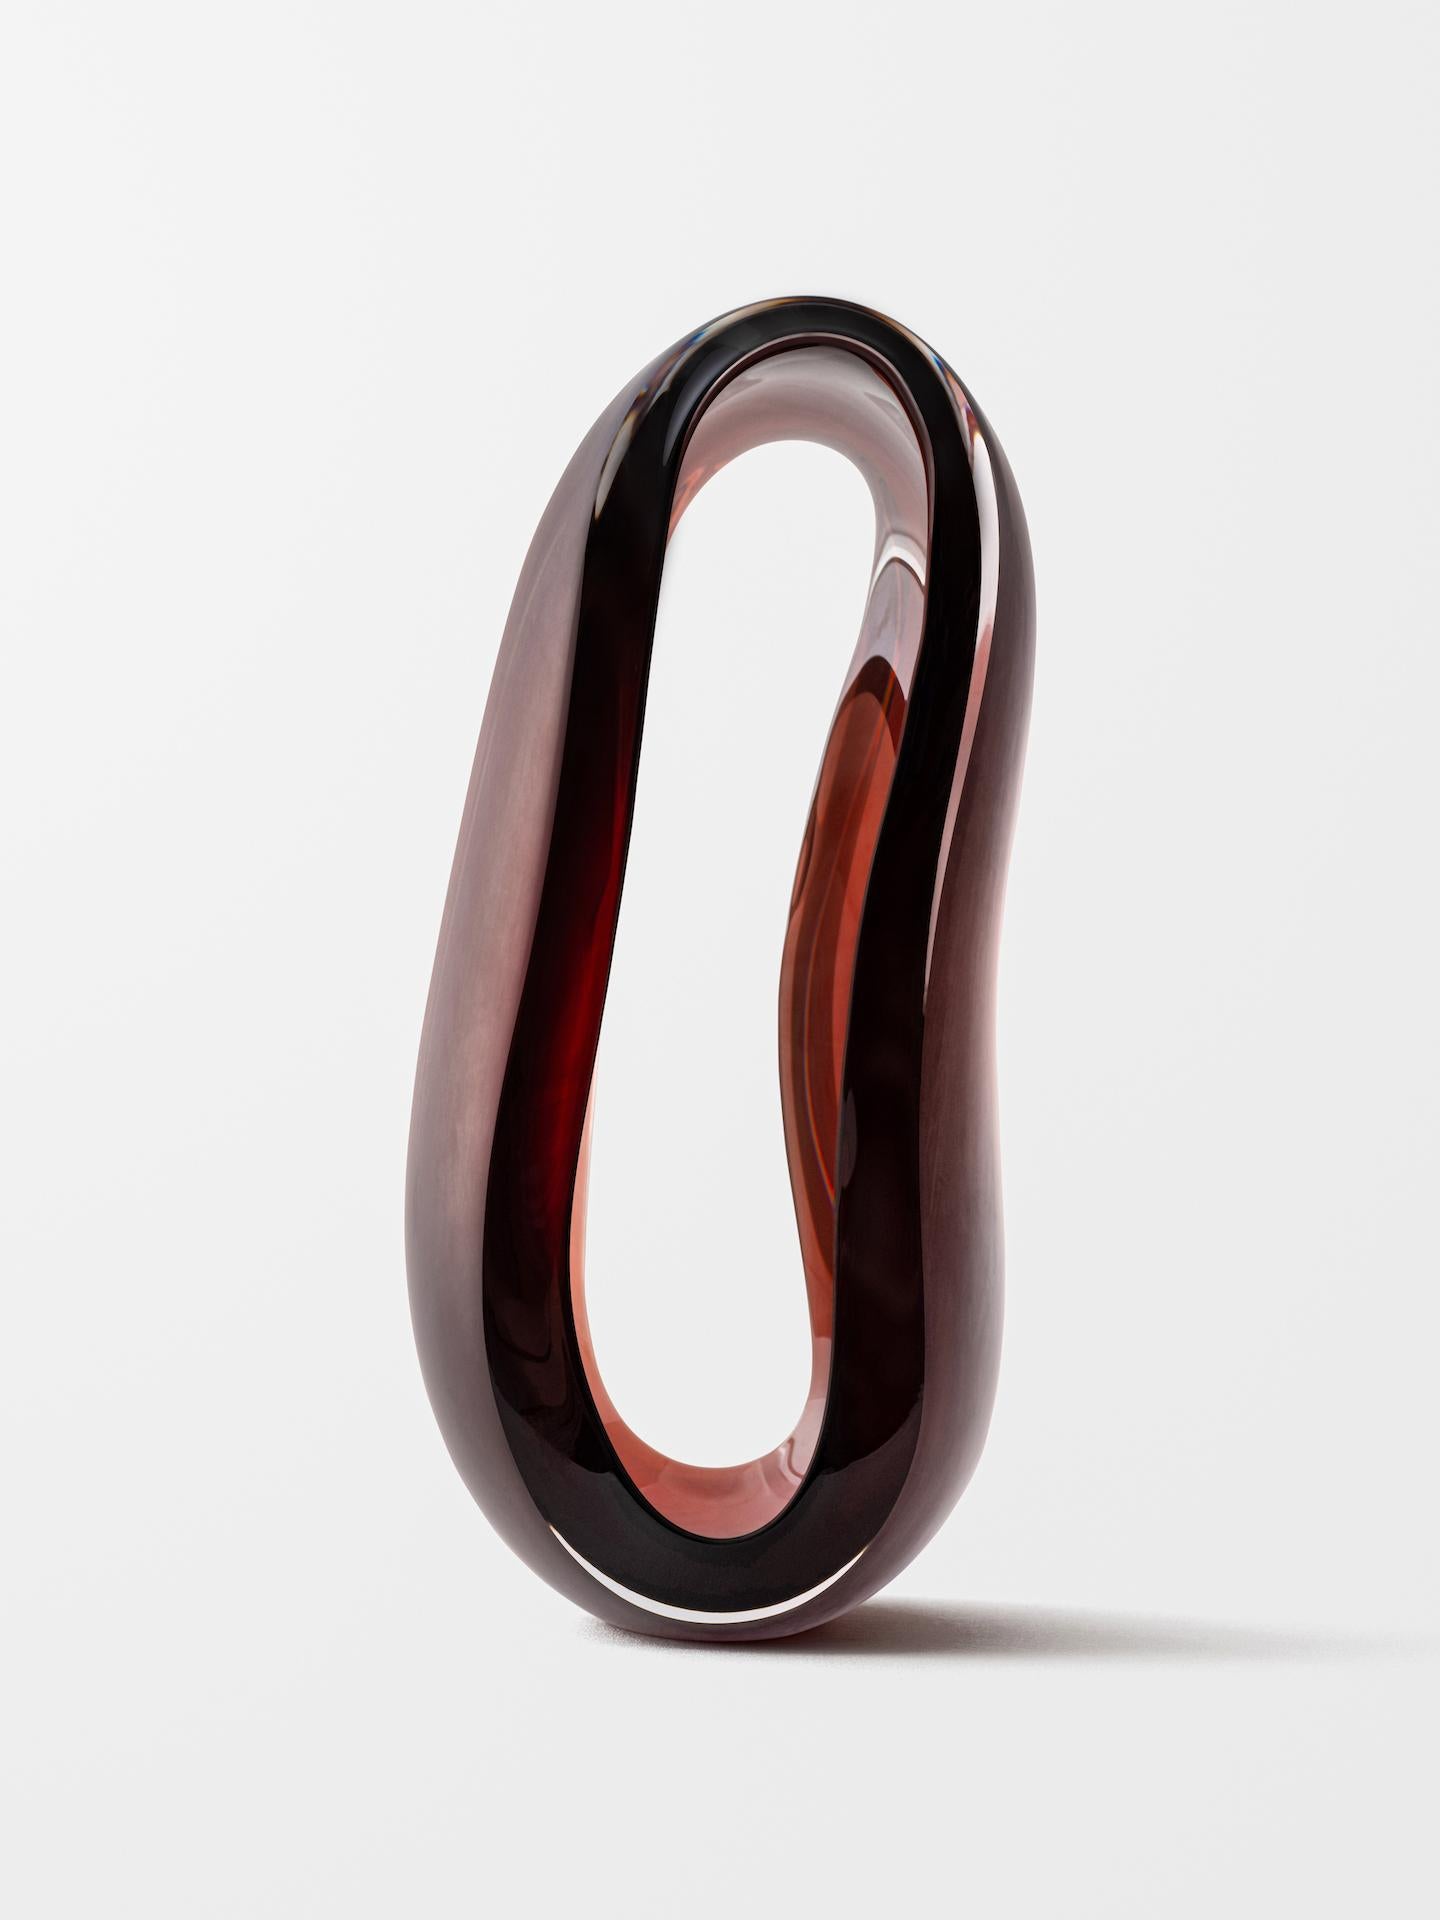 Loops (Amber) - Contemporary Sculpture by Jonas Noël Niedermann